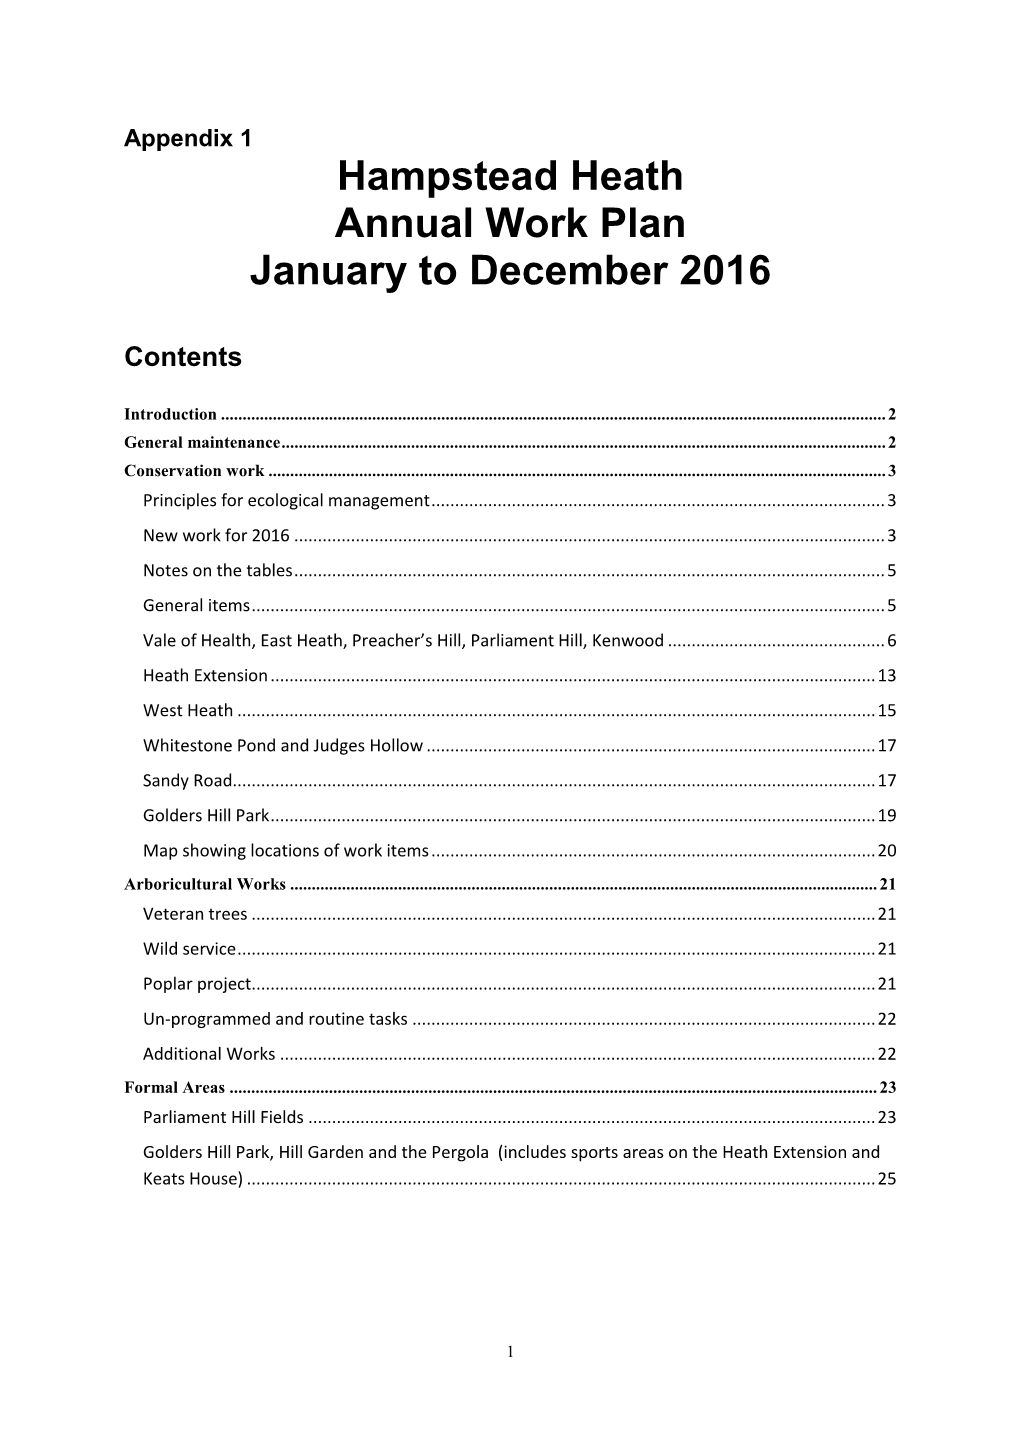 Hampstead Heath Annual Work Plan January to December 2016